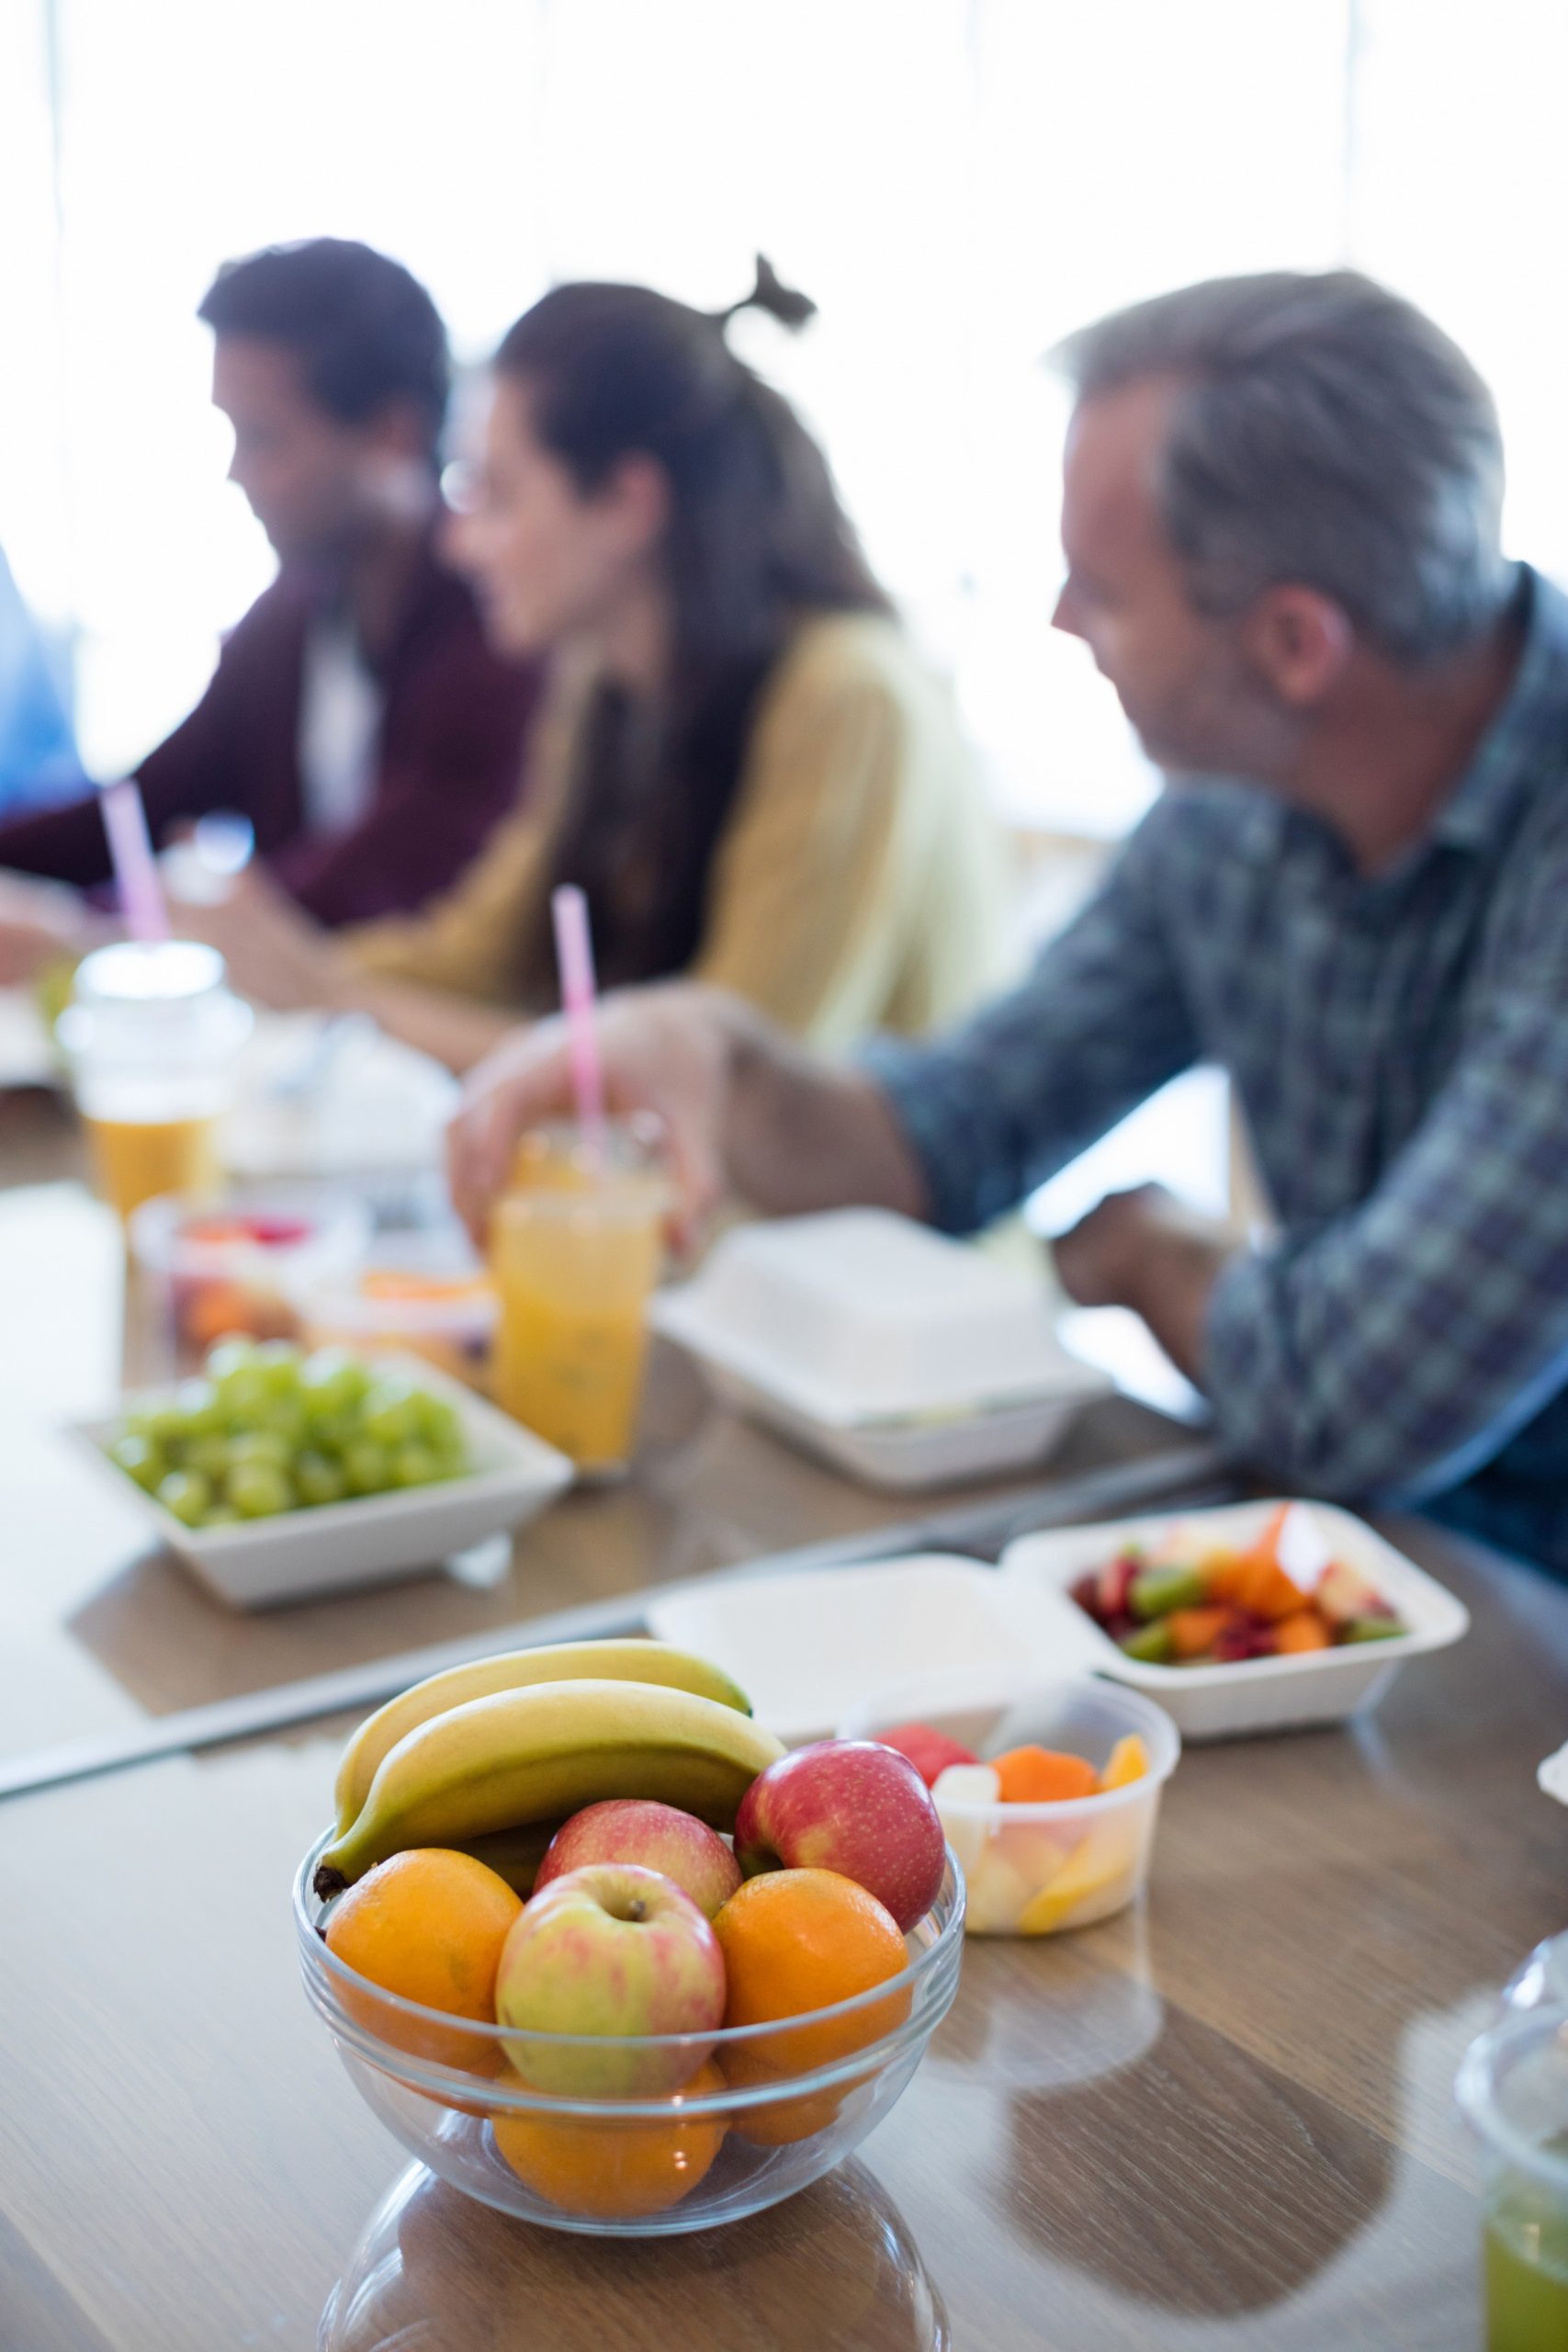 San Antonio Break Room | Workplace Snacks & Fresh Food | Employee Benefit